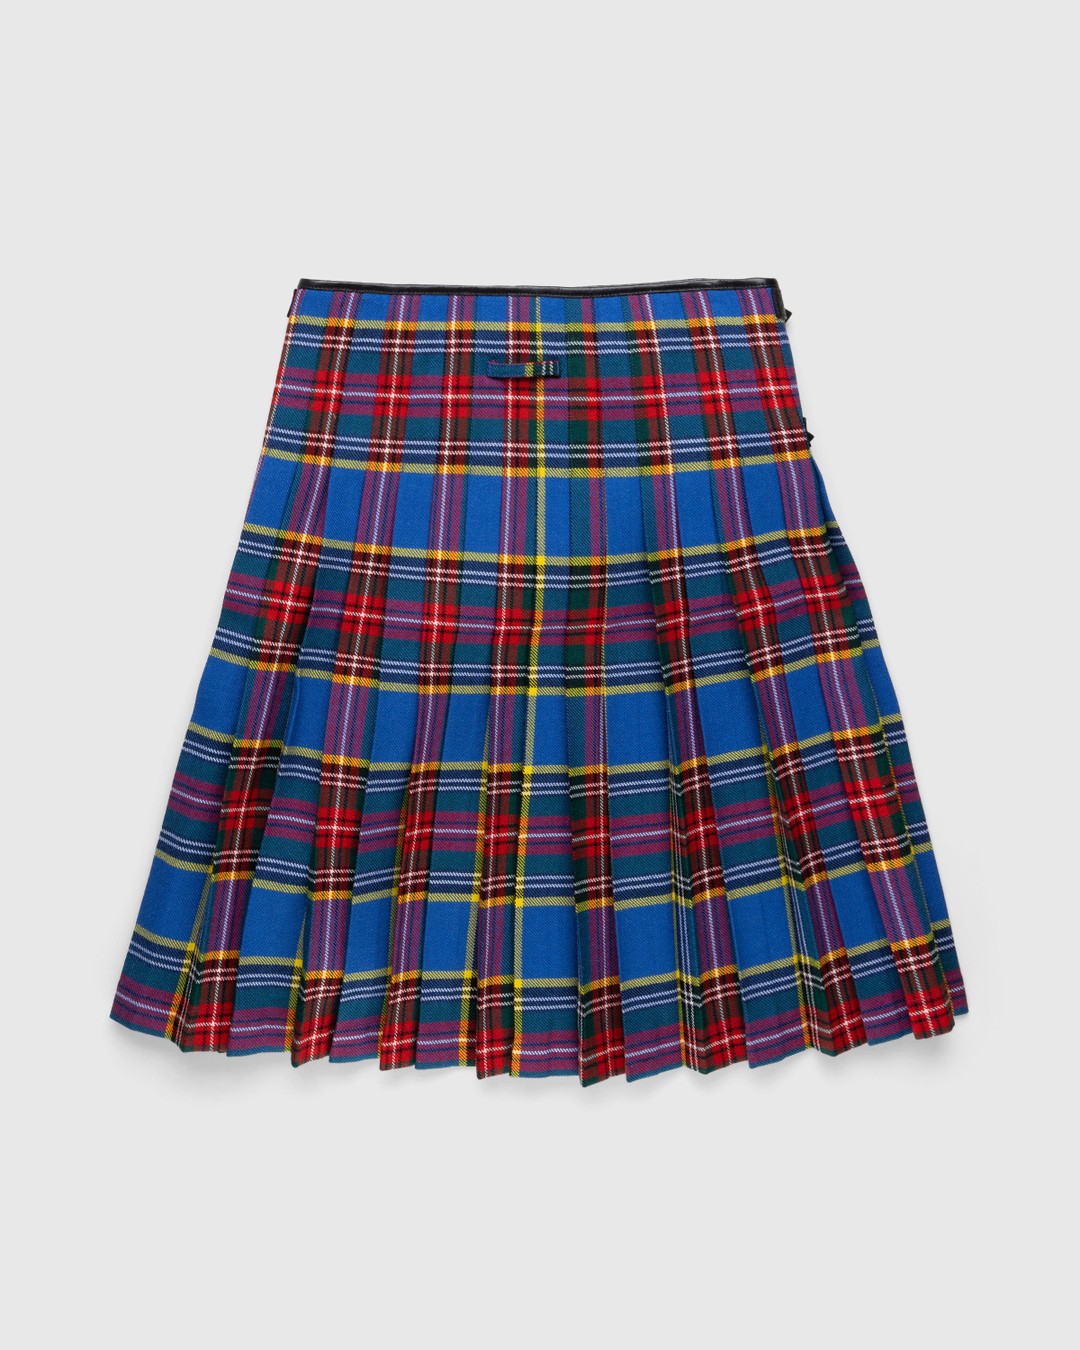 Jean Paul Gaultier x Highsnobiety – Classic Kilt Signature - Skirts - Multi - Image 2